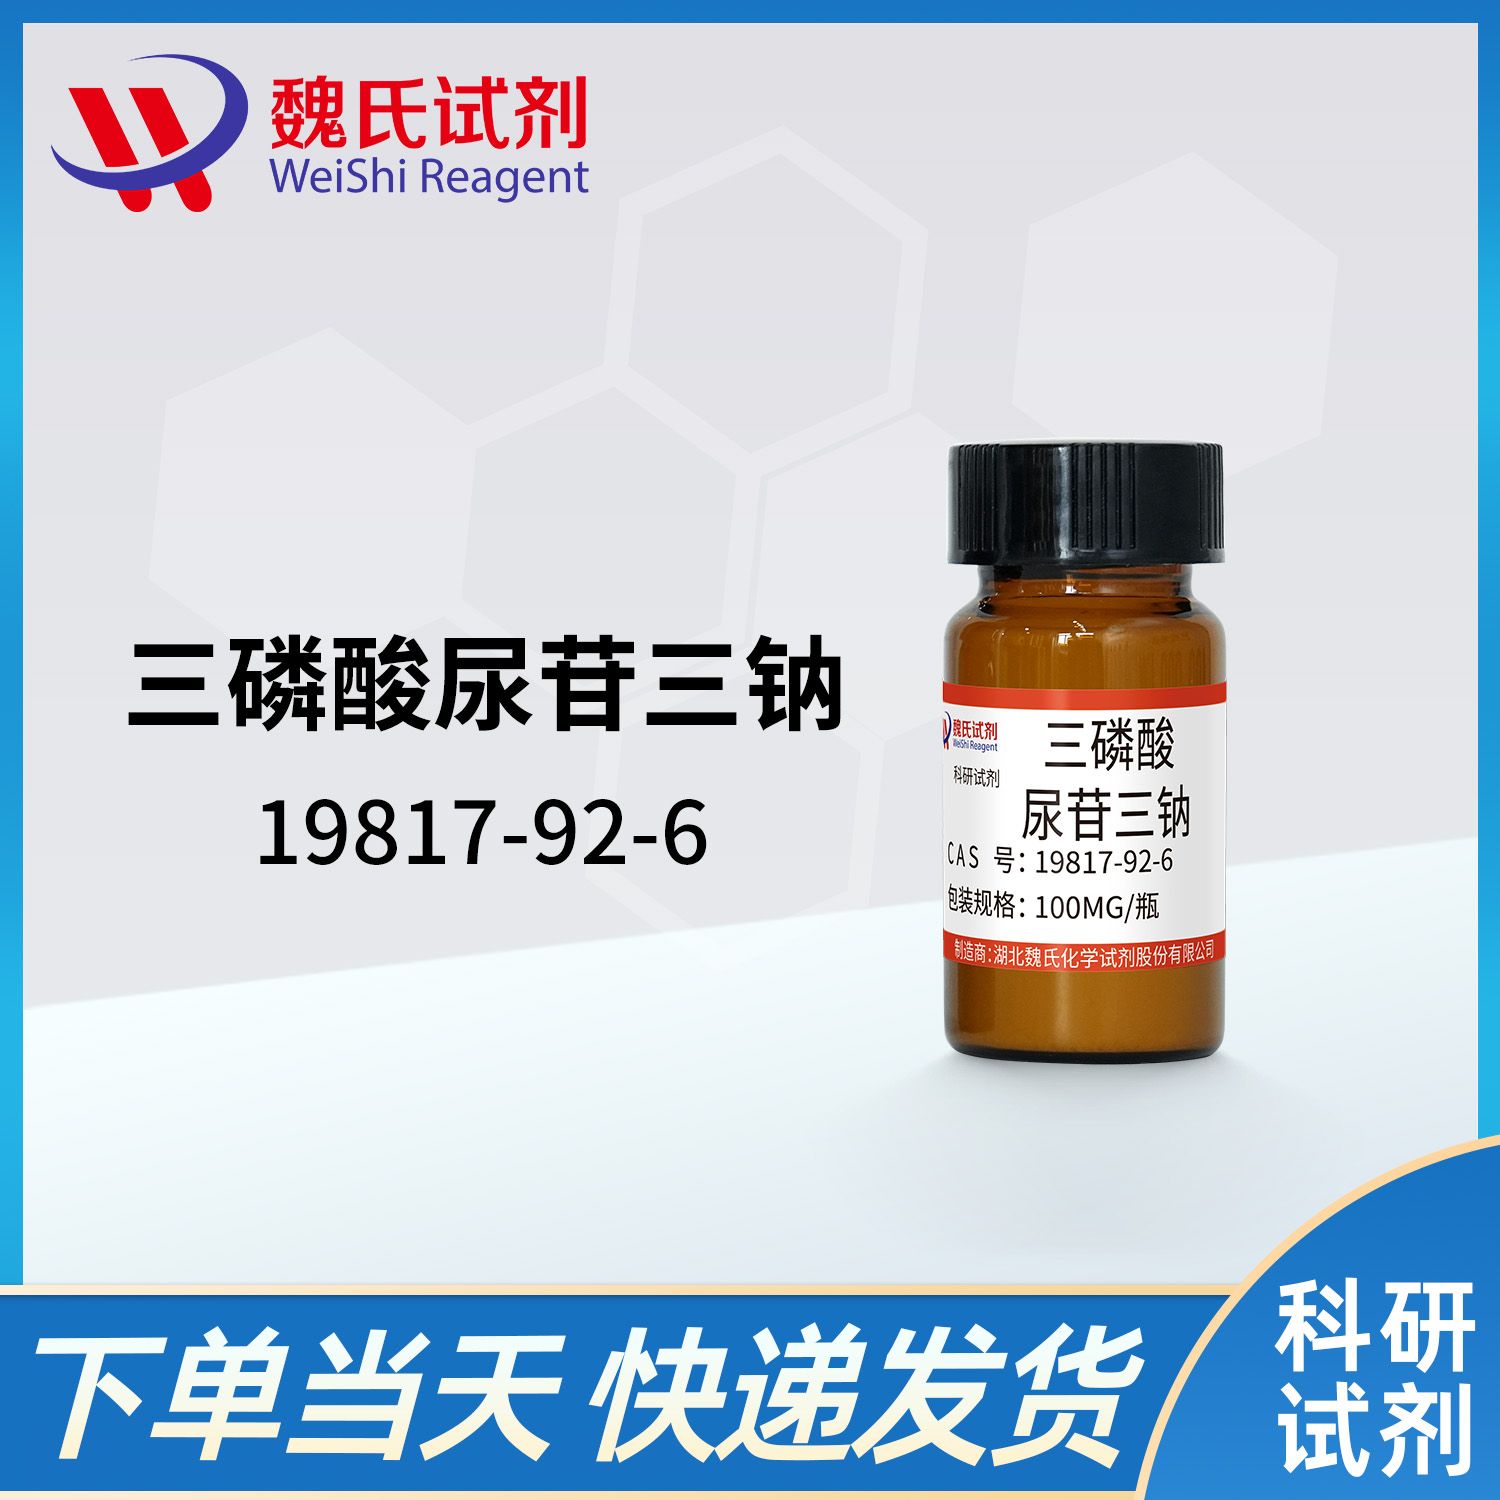 19817-92-6 /尿苷三磷酸三钠盐/Uridine-5'-triphosphoric acid trisodium salt